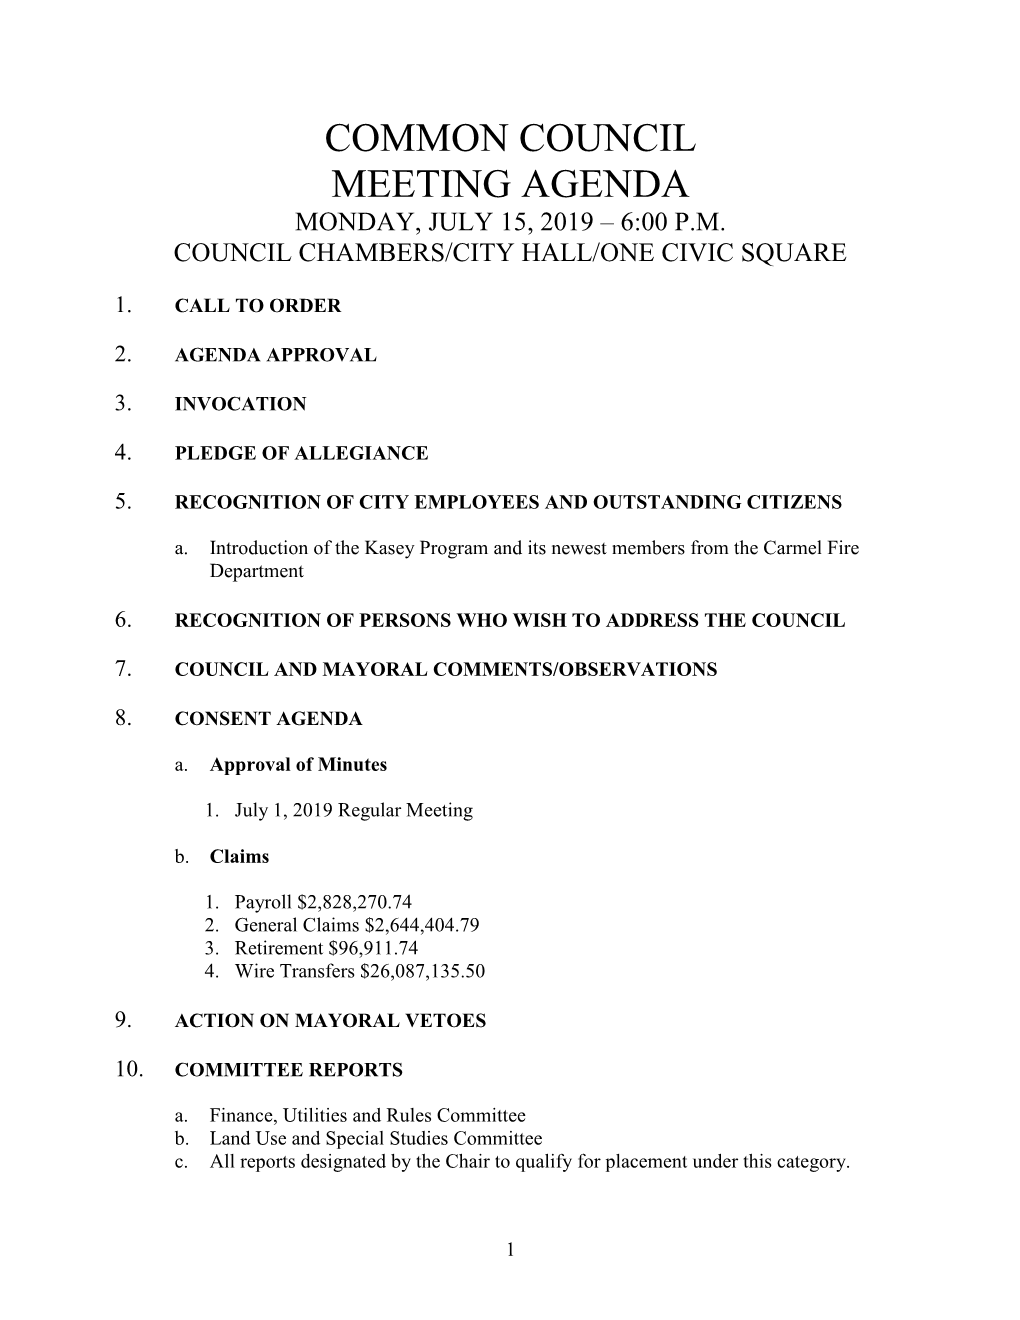 Common Council Meeting Agenda Monday, July 15, 2019 – 6:00 P.M